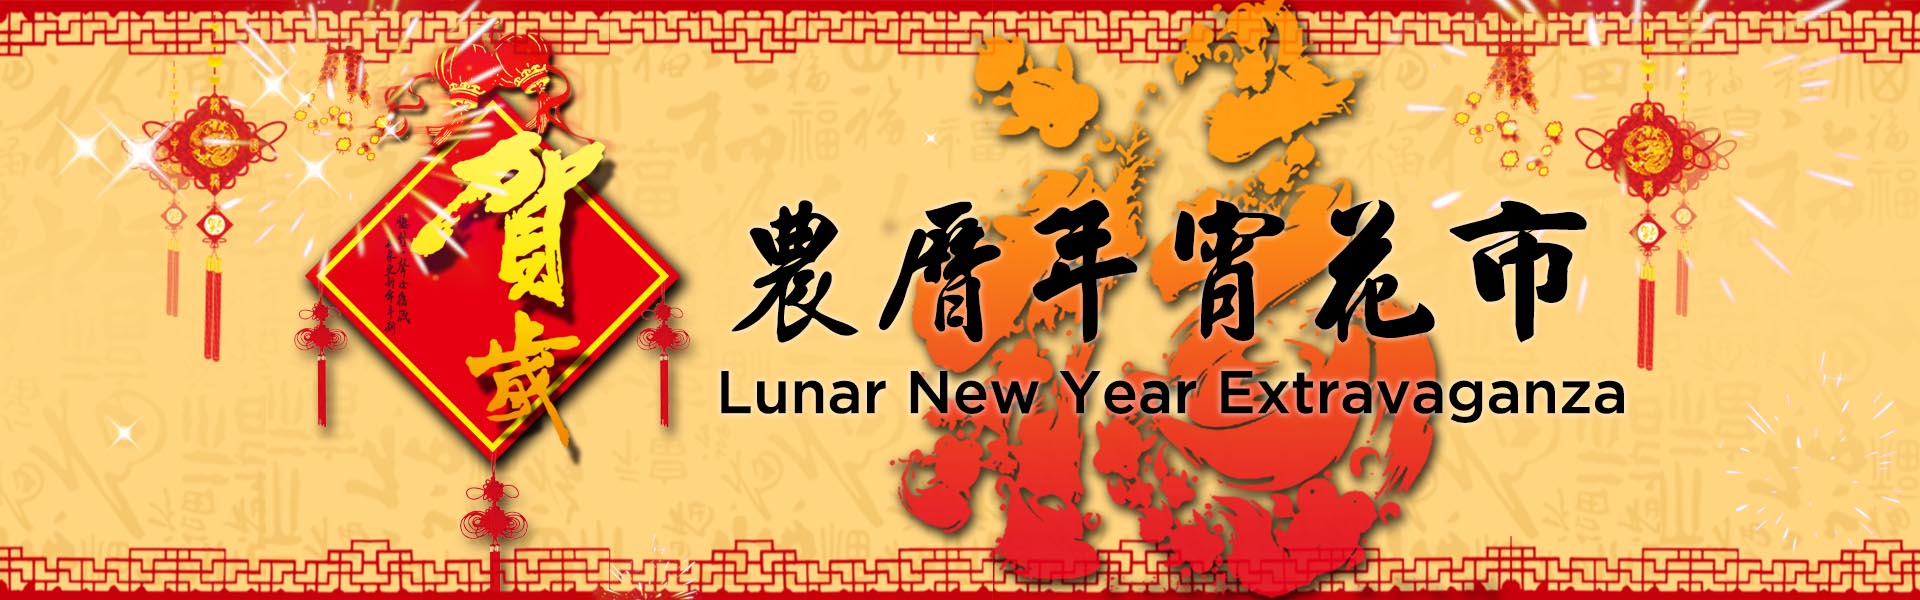 ecmcc-new-year-banner